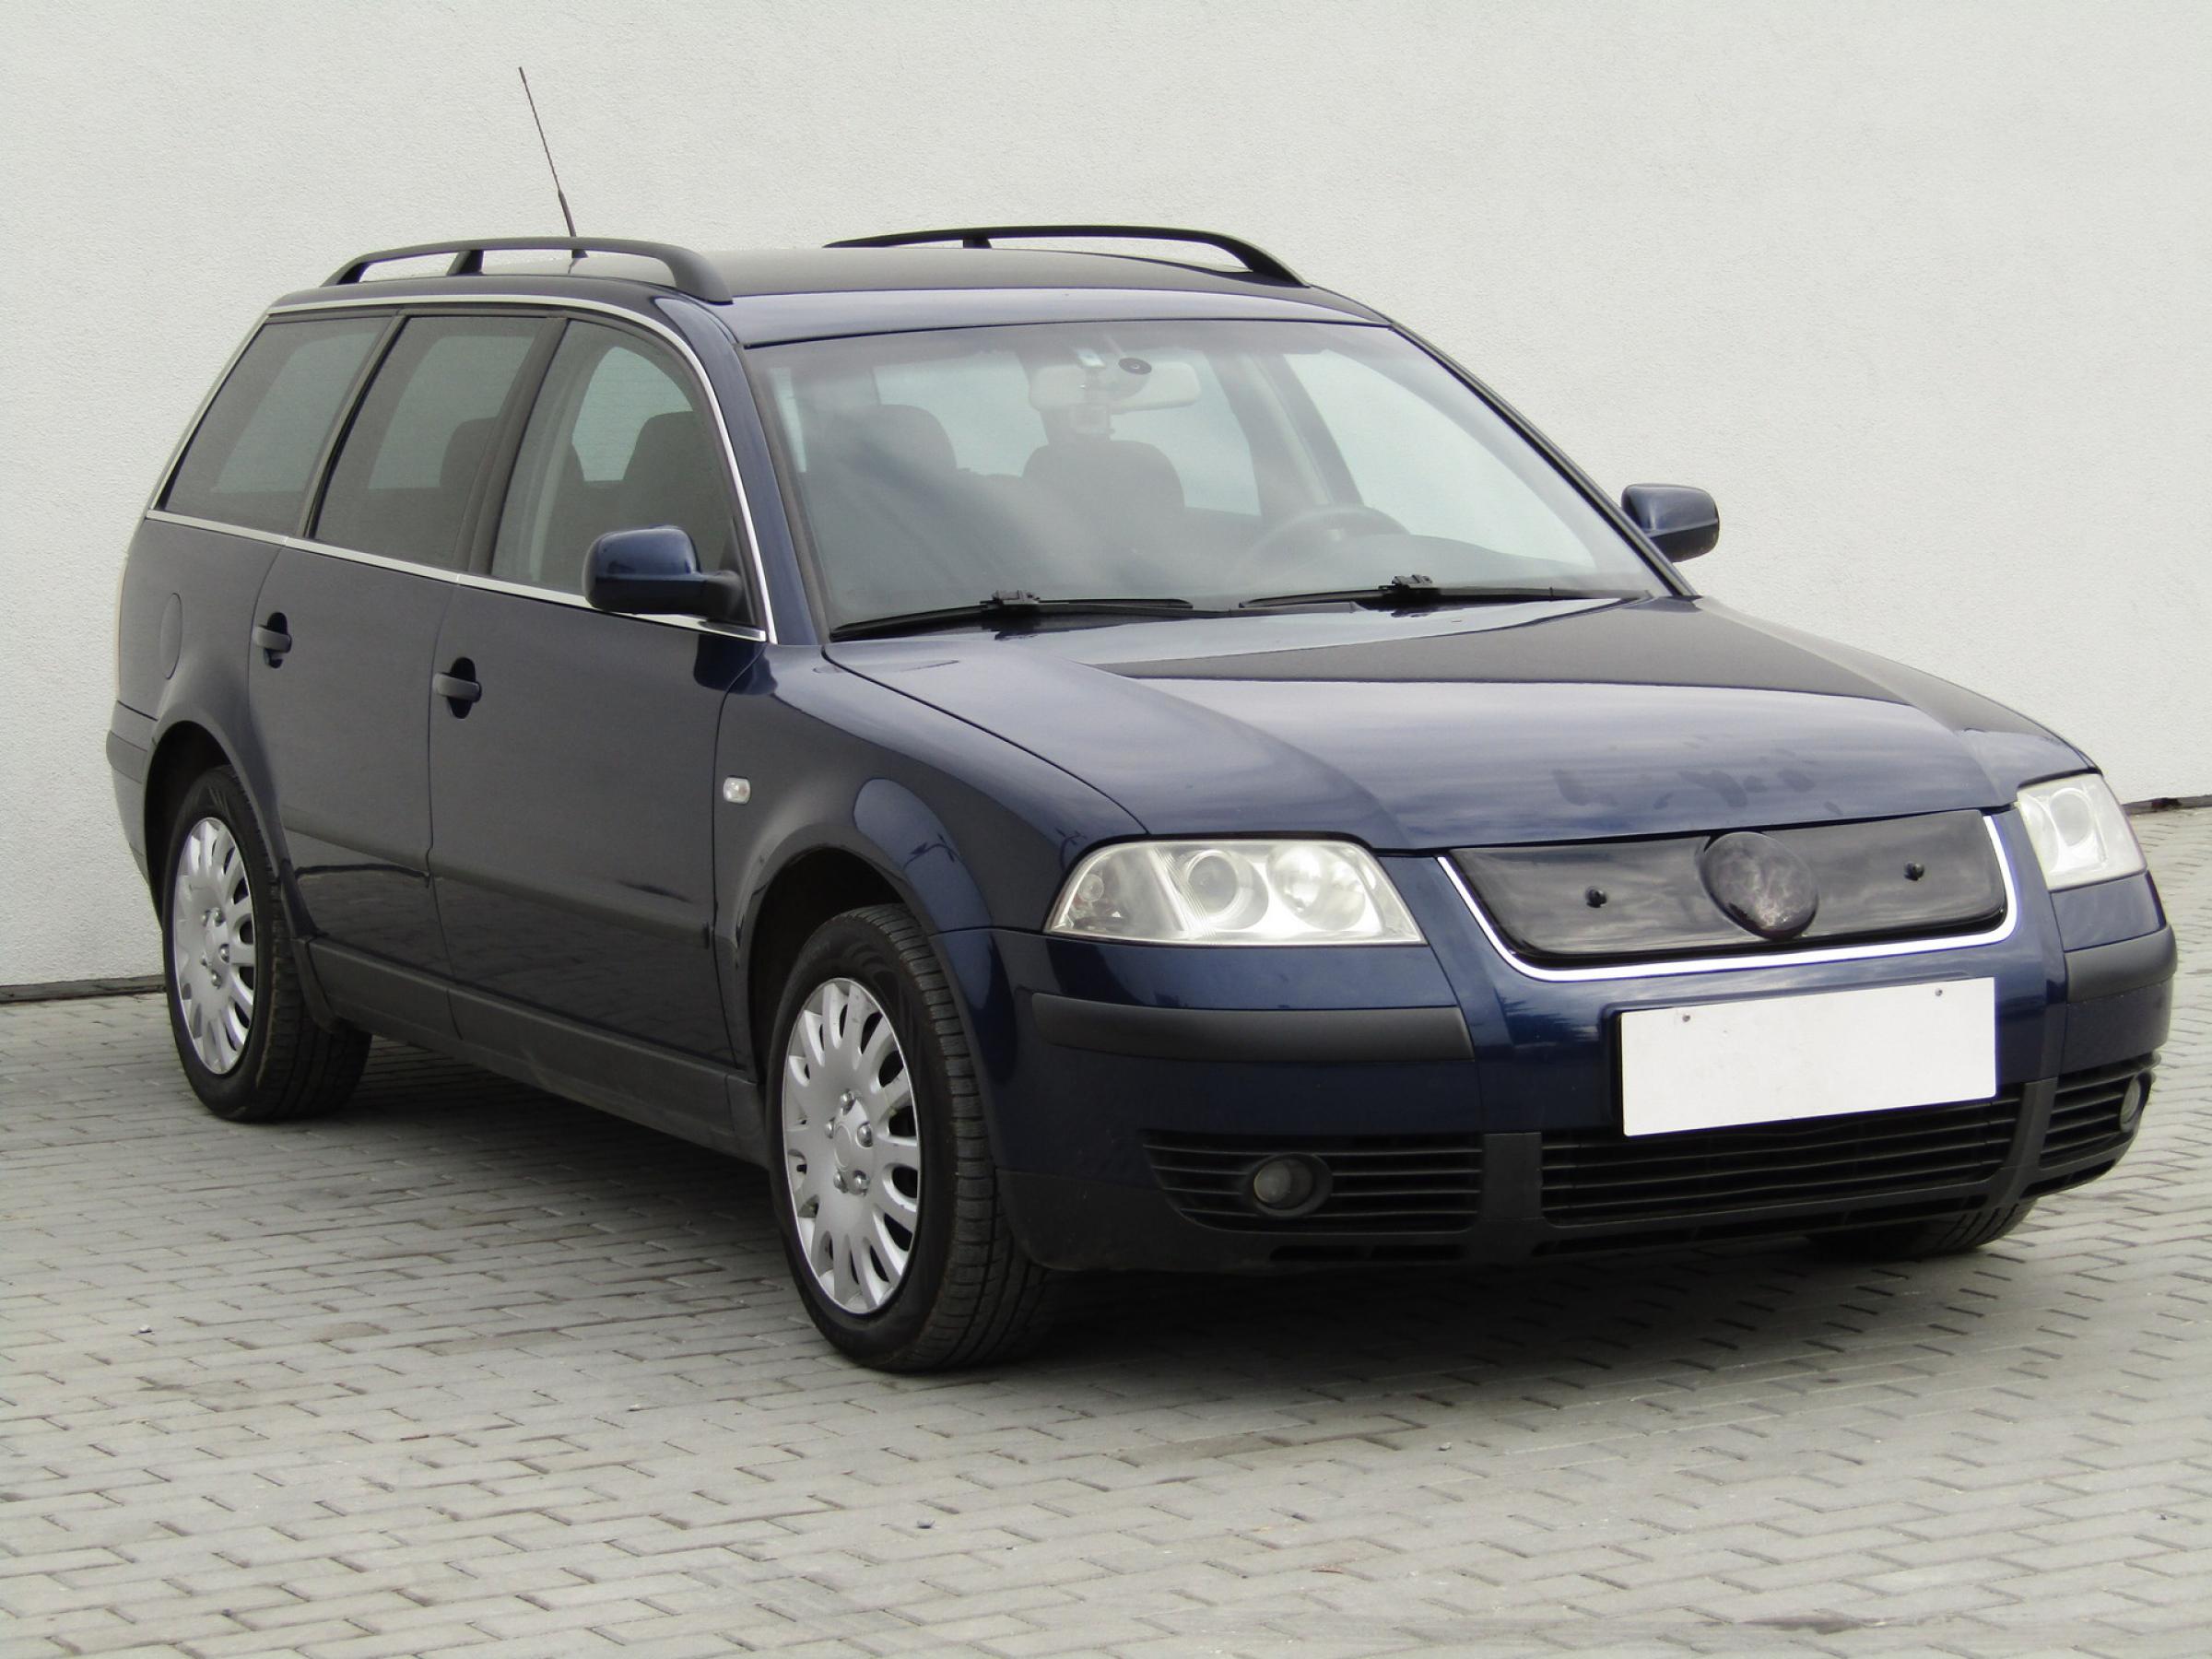 Volkswagen Passat, 2004 - celkový pohled